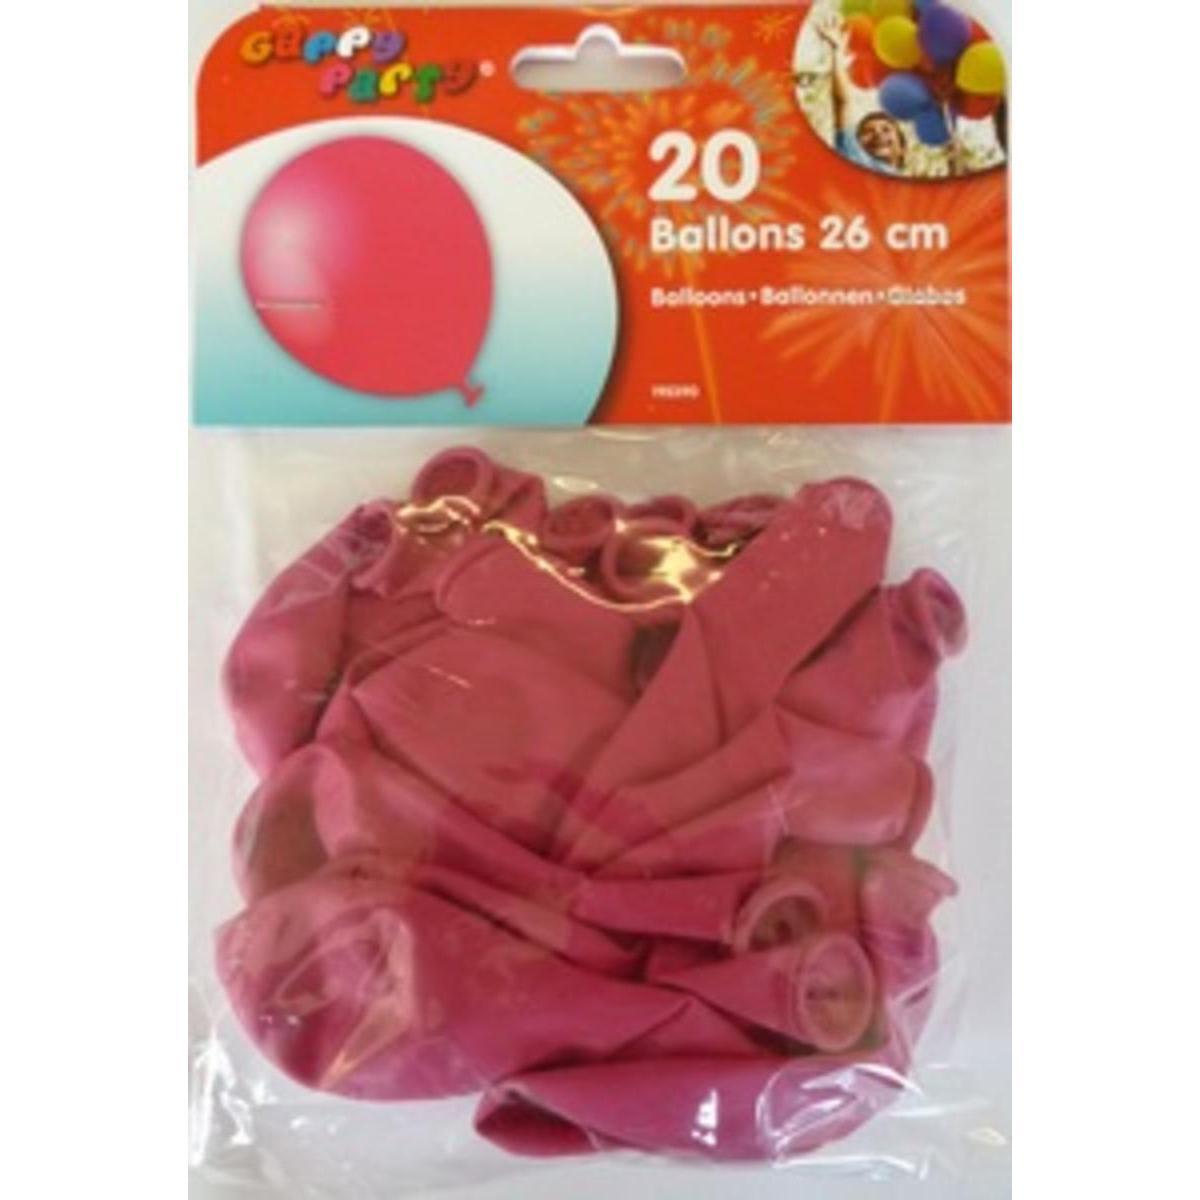 Ballons 25 cm fuchsiax 20 pièces Gappy party